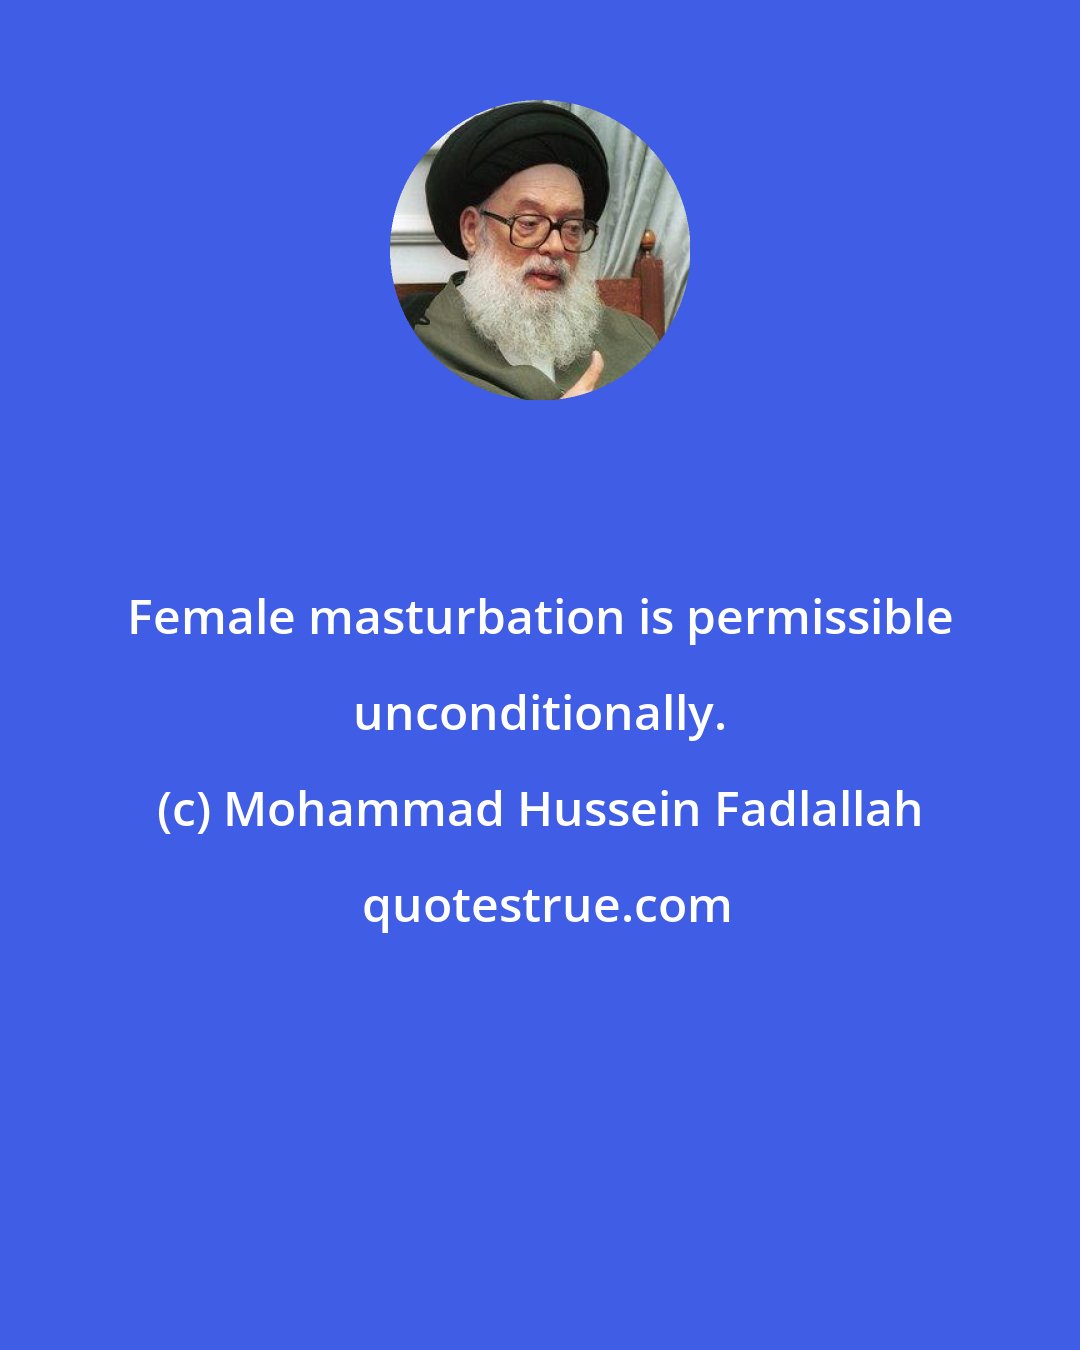 Mohammad Hussein Fadlallah: Female masturbation is permissible unconditionally.